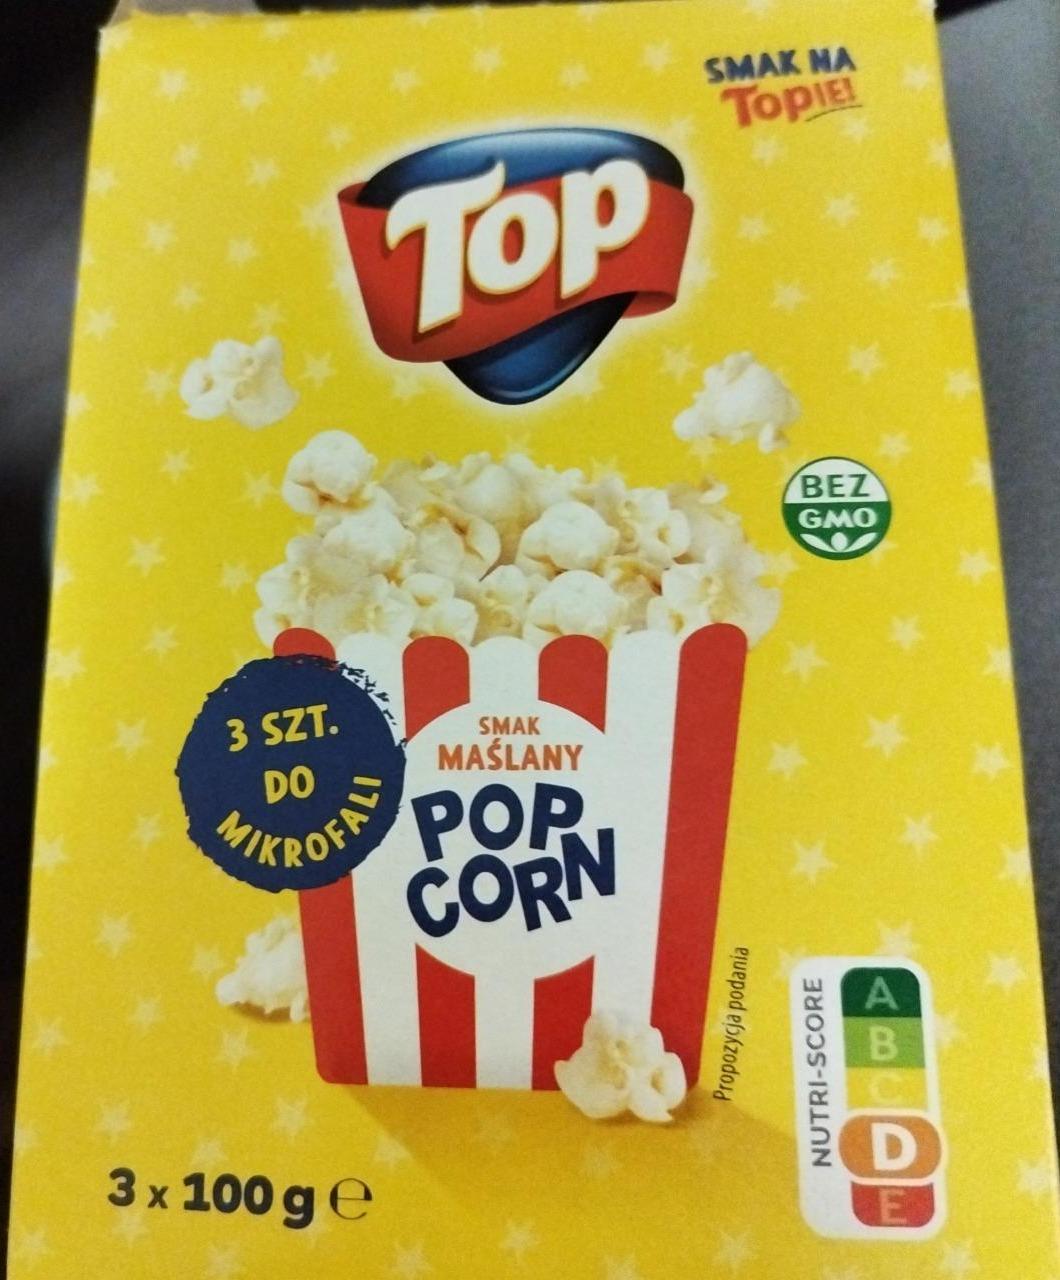 Fotografie - Pop Corn smak maślany TOP